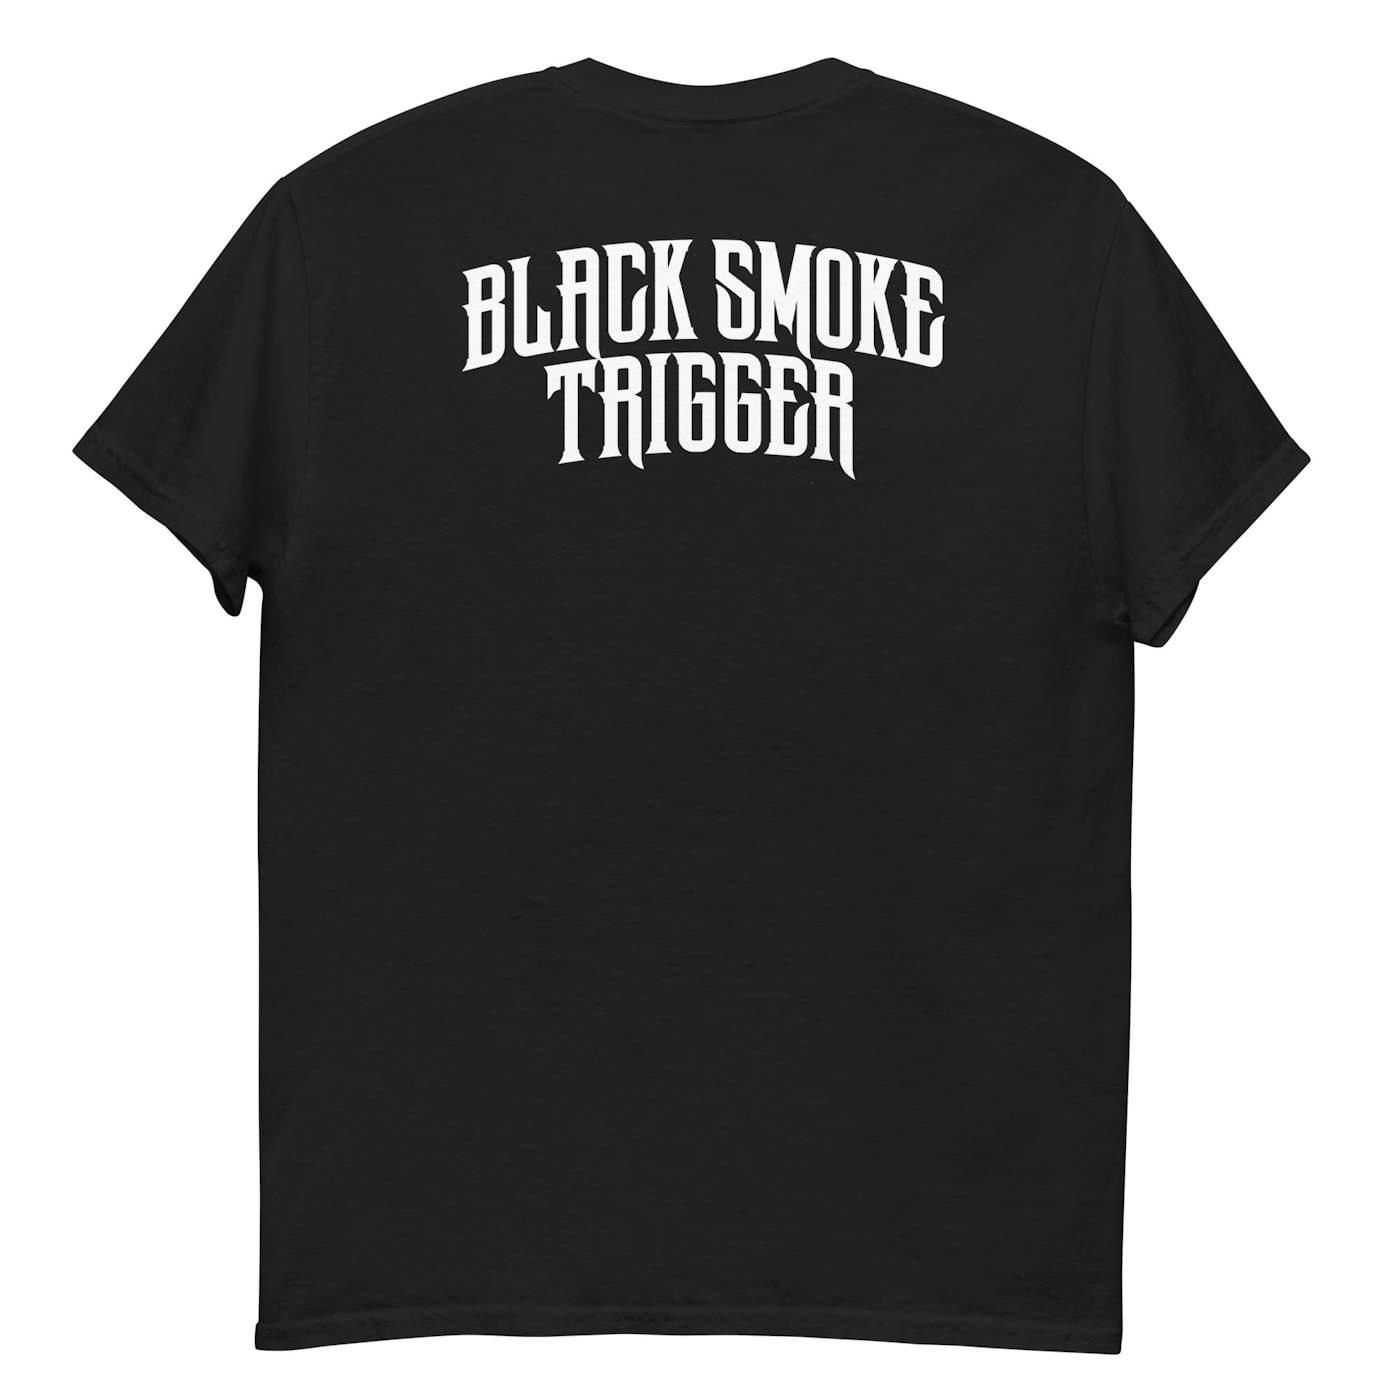 Black Smoke Trigger Perfect Torture Tee - Dark